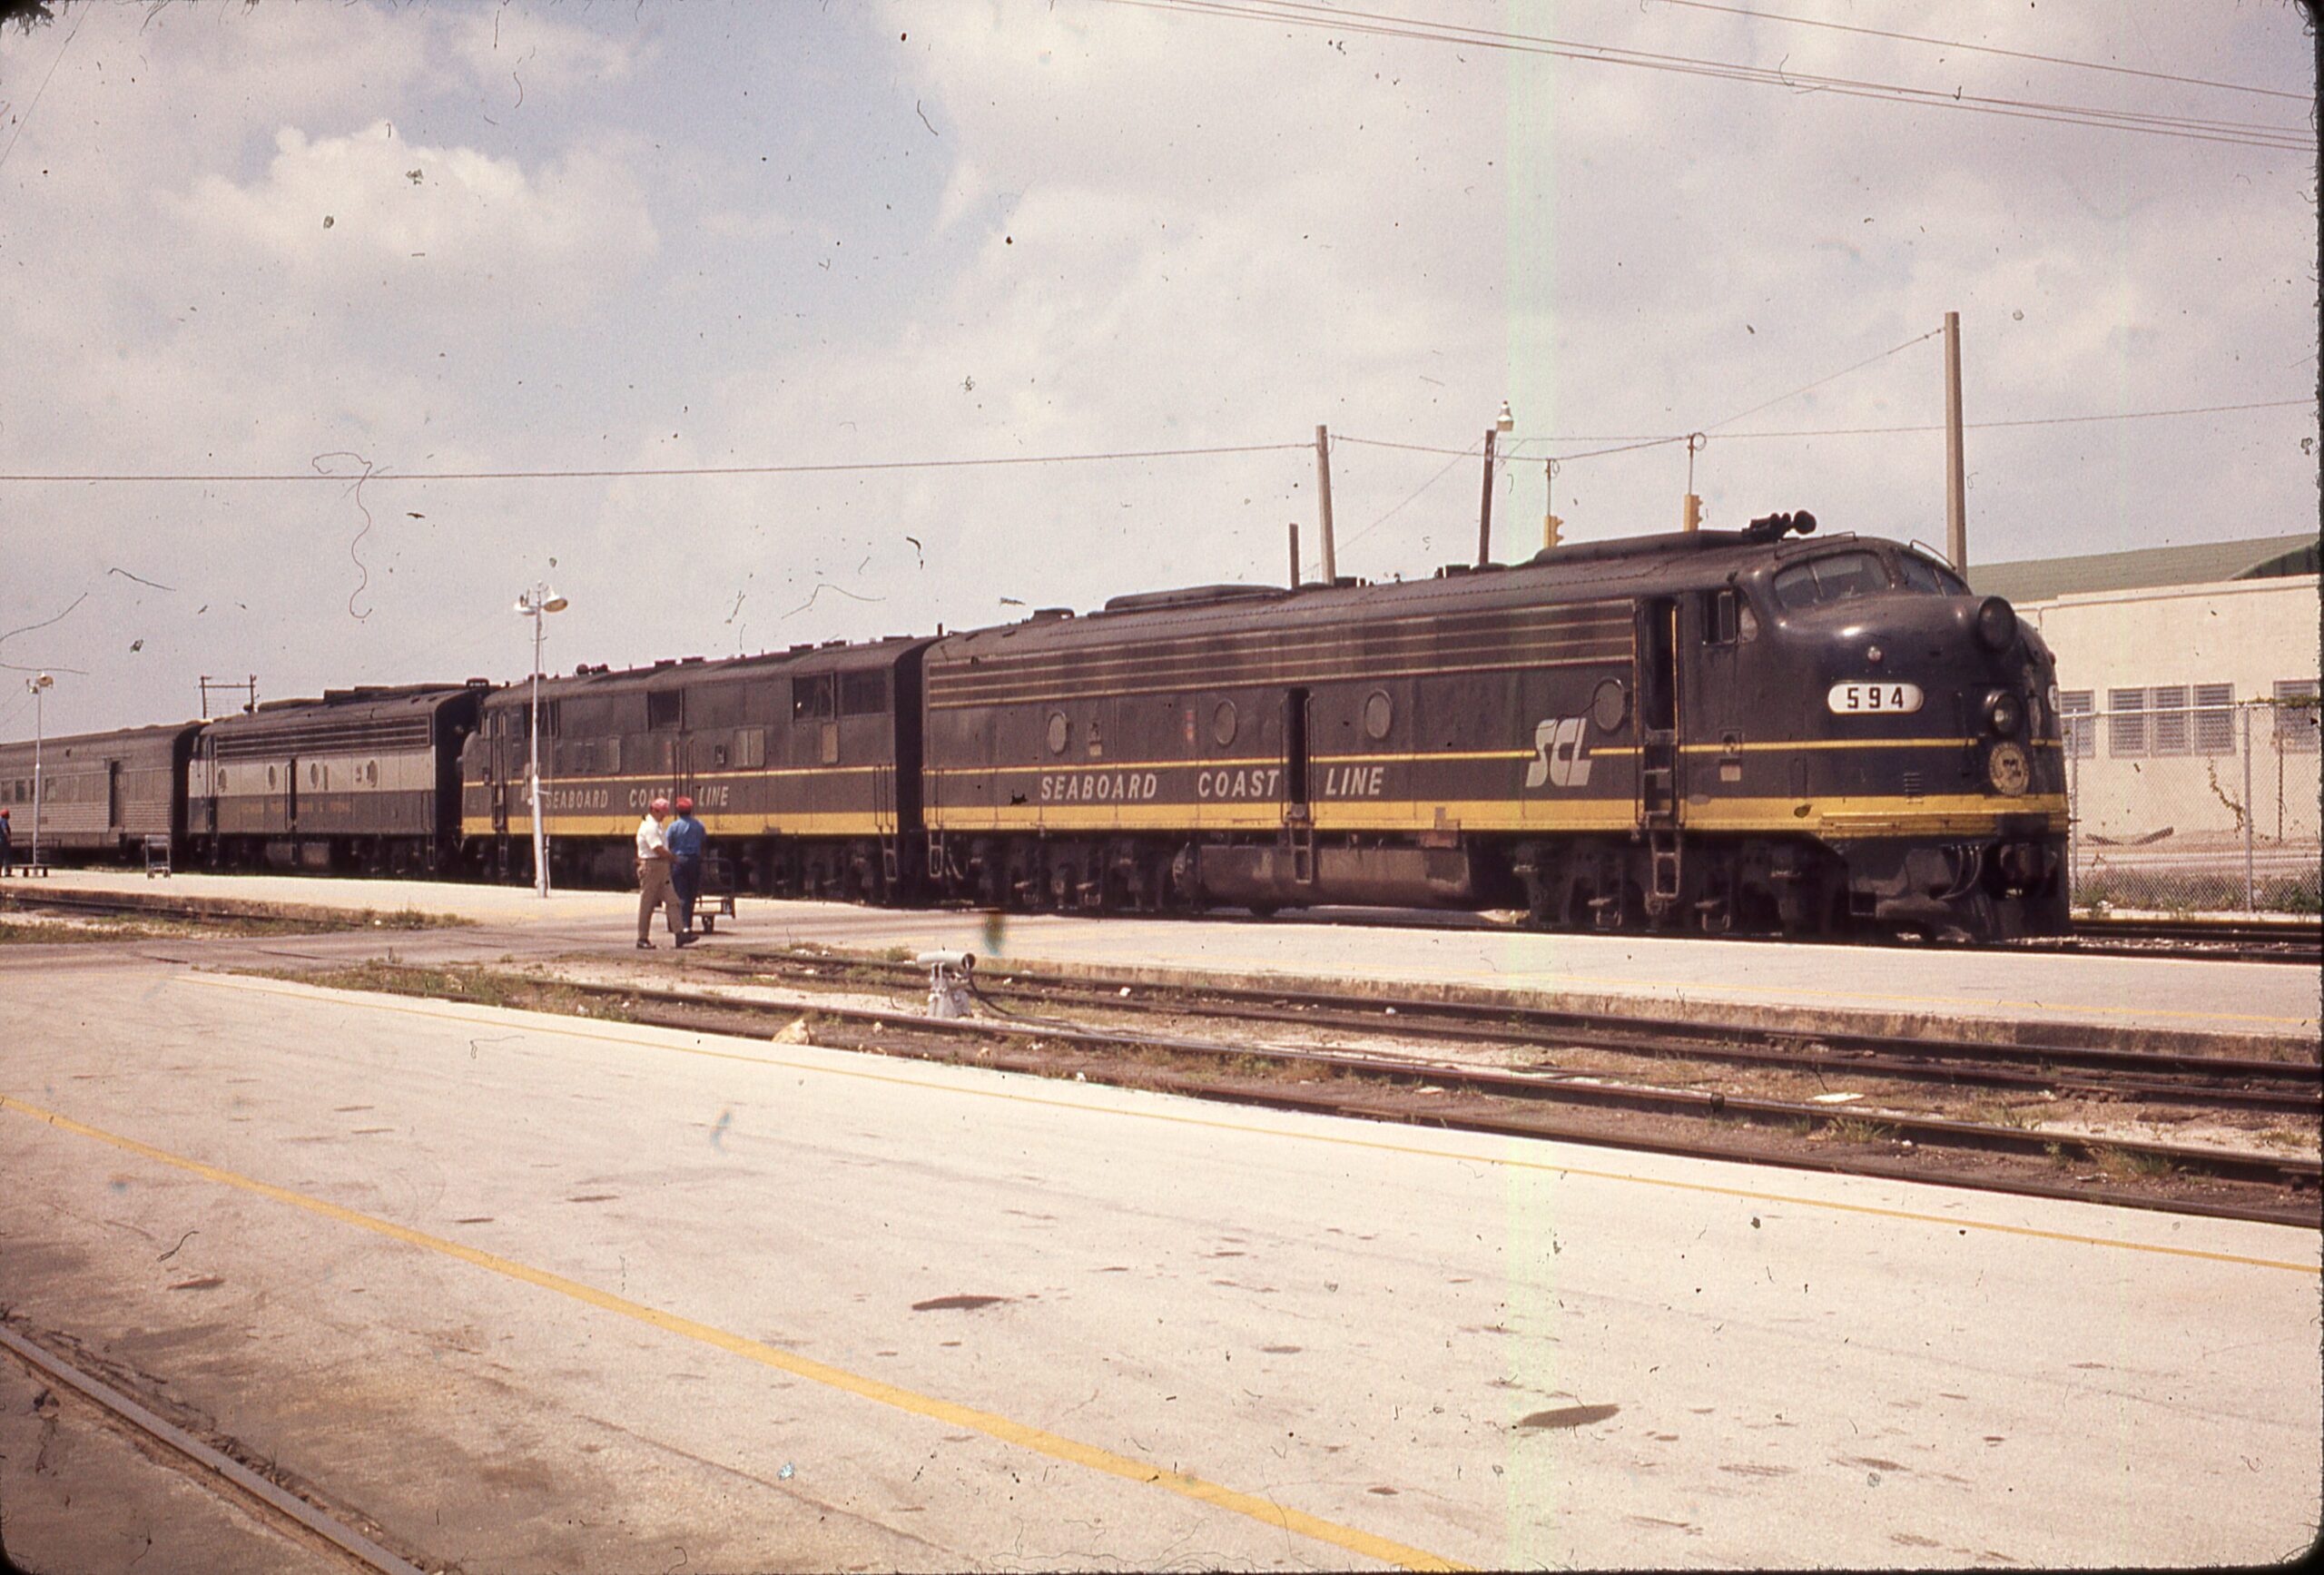 Amtrak | Seaboard Coast Lines | EMD E8a #594 + 2 diesel-electric locomotives | Train 87 Florida Special | April 11, 1972 | Steven Timko collection